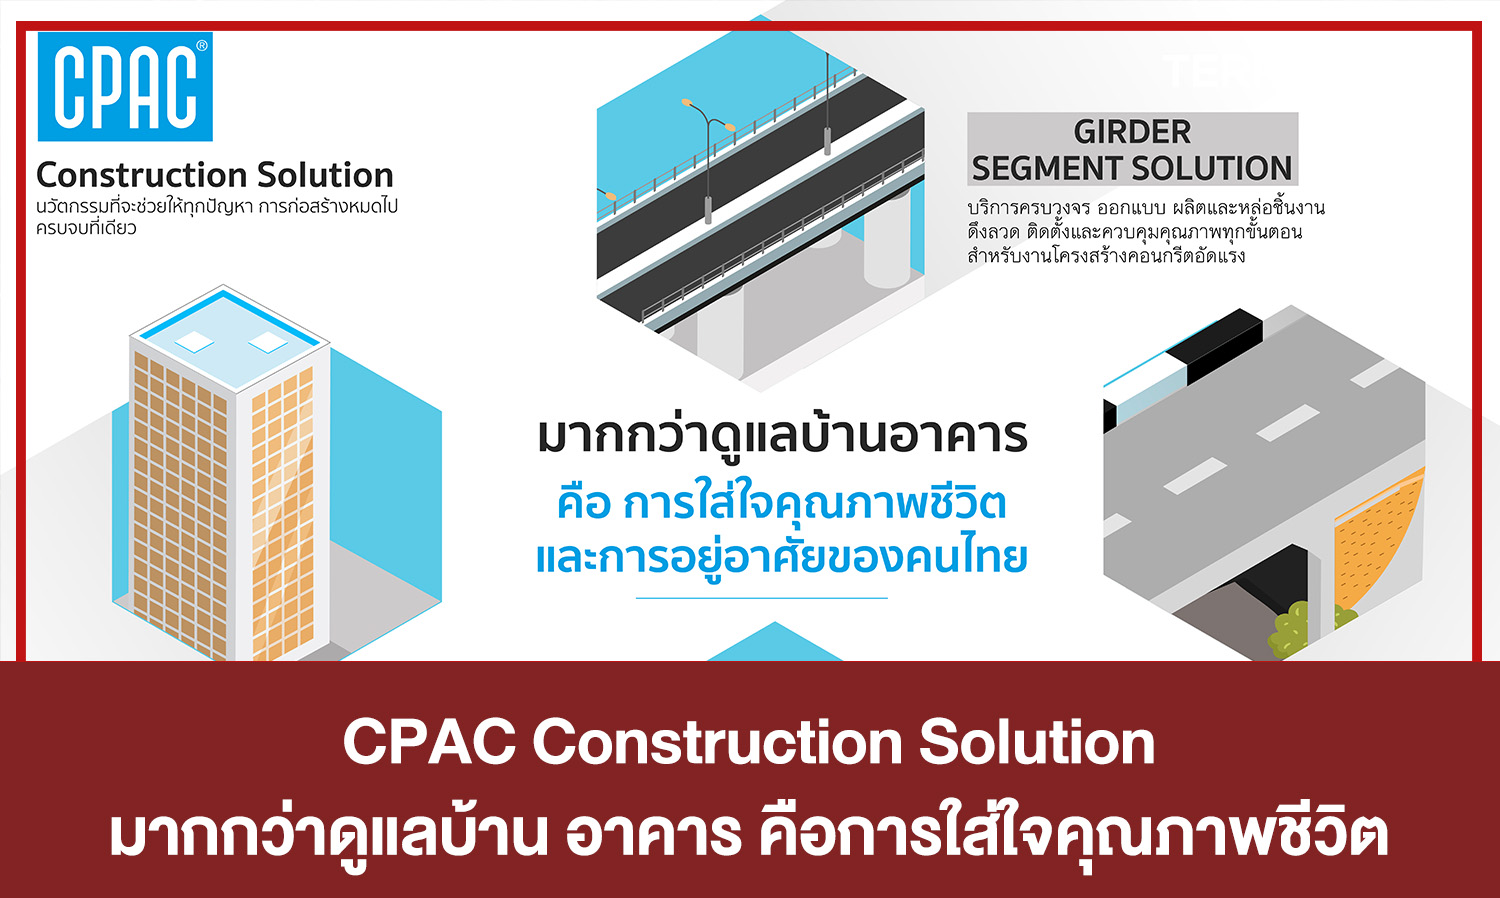 CPAC Construction Solution : มากกว่าดูแลบ้าน อาคาร คือการใส่ใจคุณภาพชีวิต และการอยู่อาศัยของคนไทย